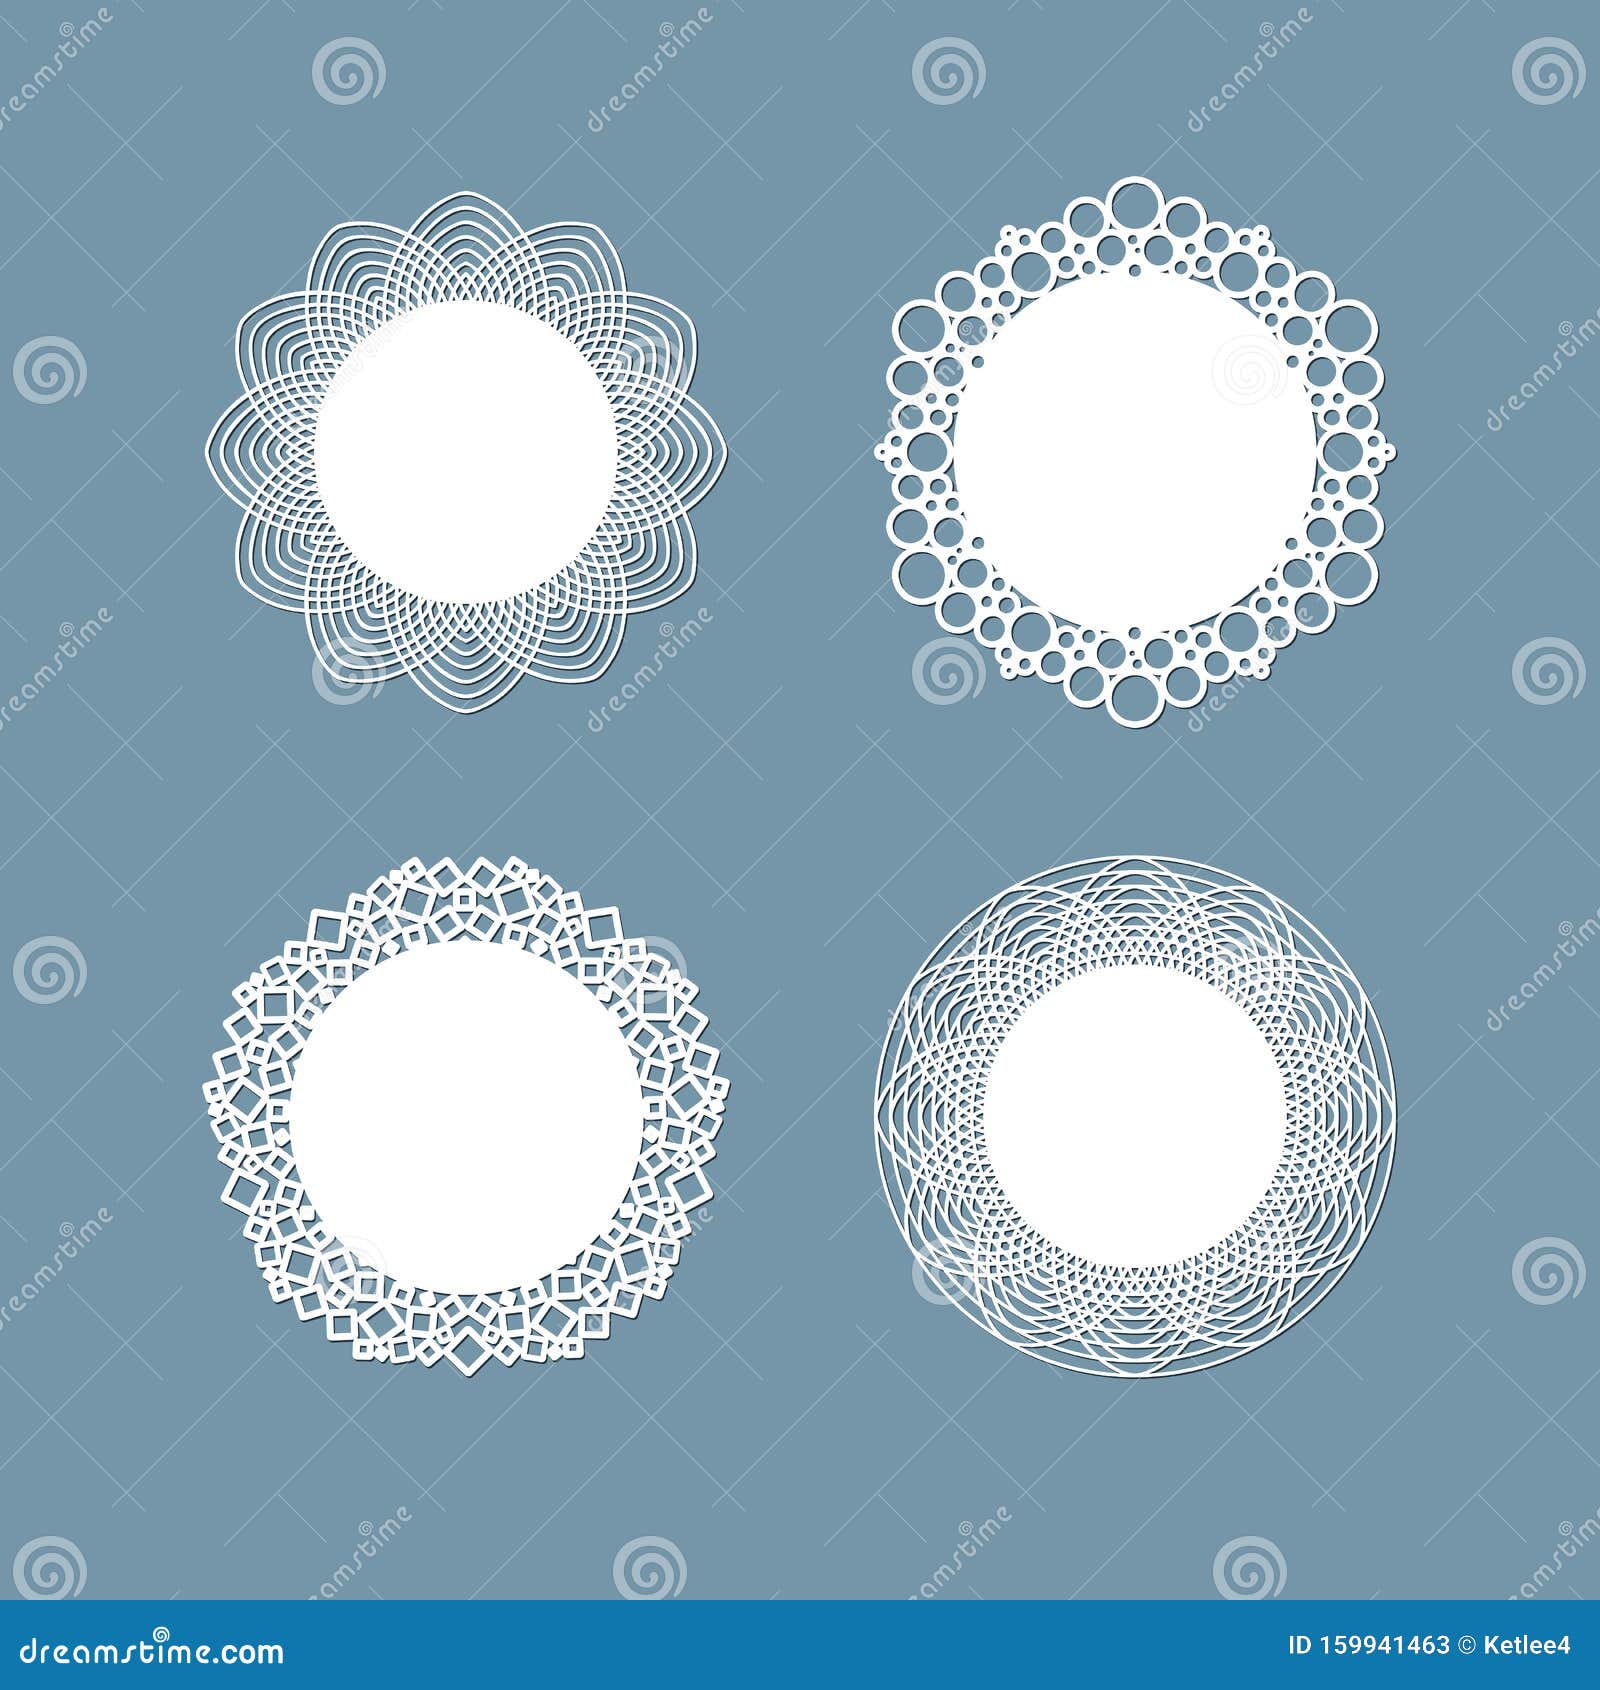 lasercut lace doily  round pattern ornament template mockup of a round white lace doily napkin lasercut frame set 